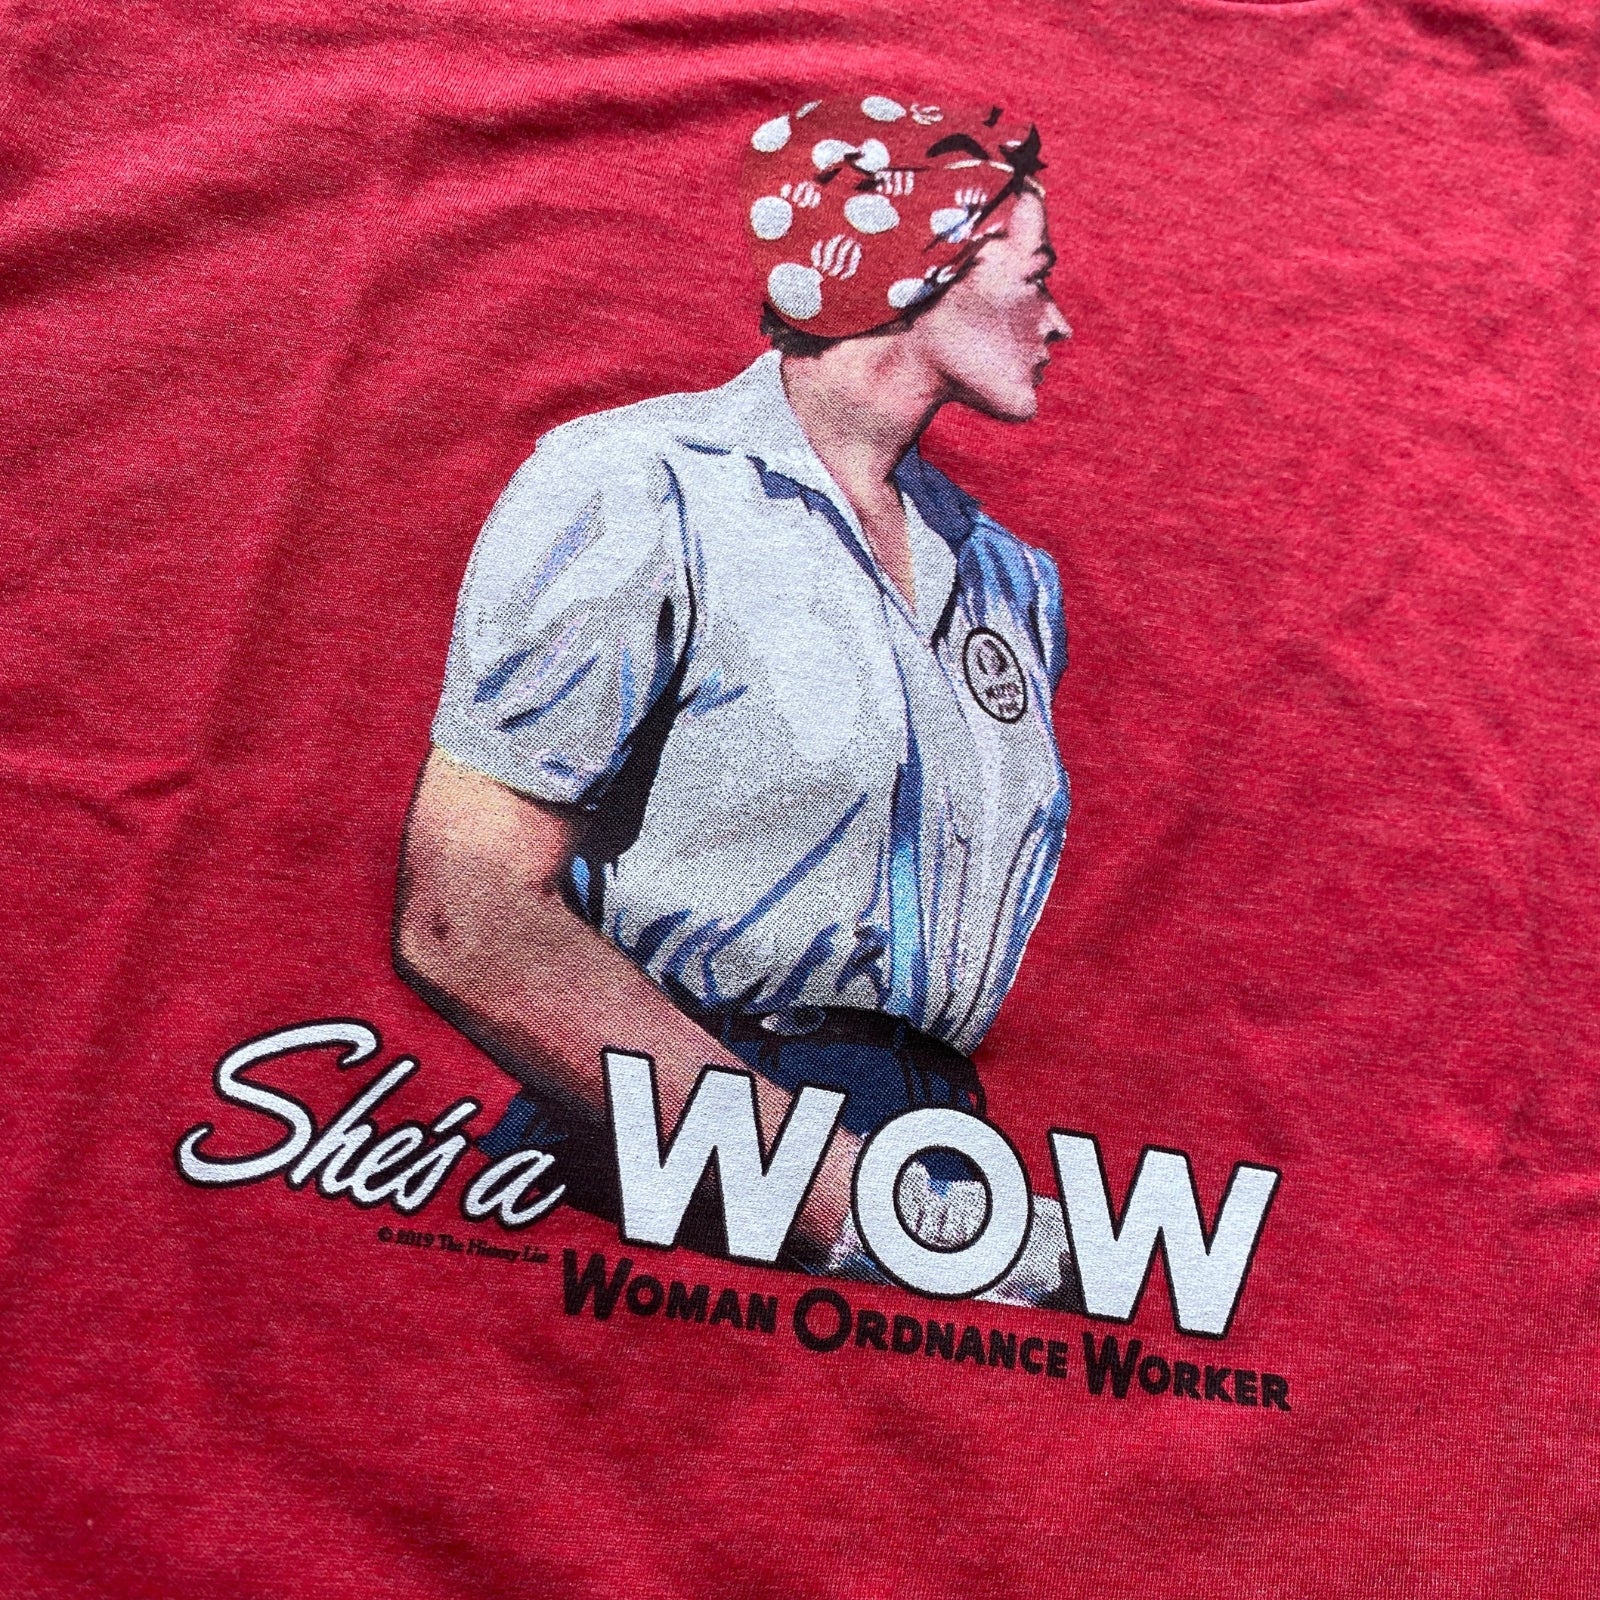 Close-up of "She's a W.O.W." V-neck shirt from The History List store